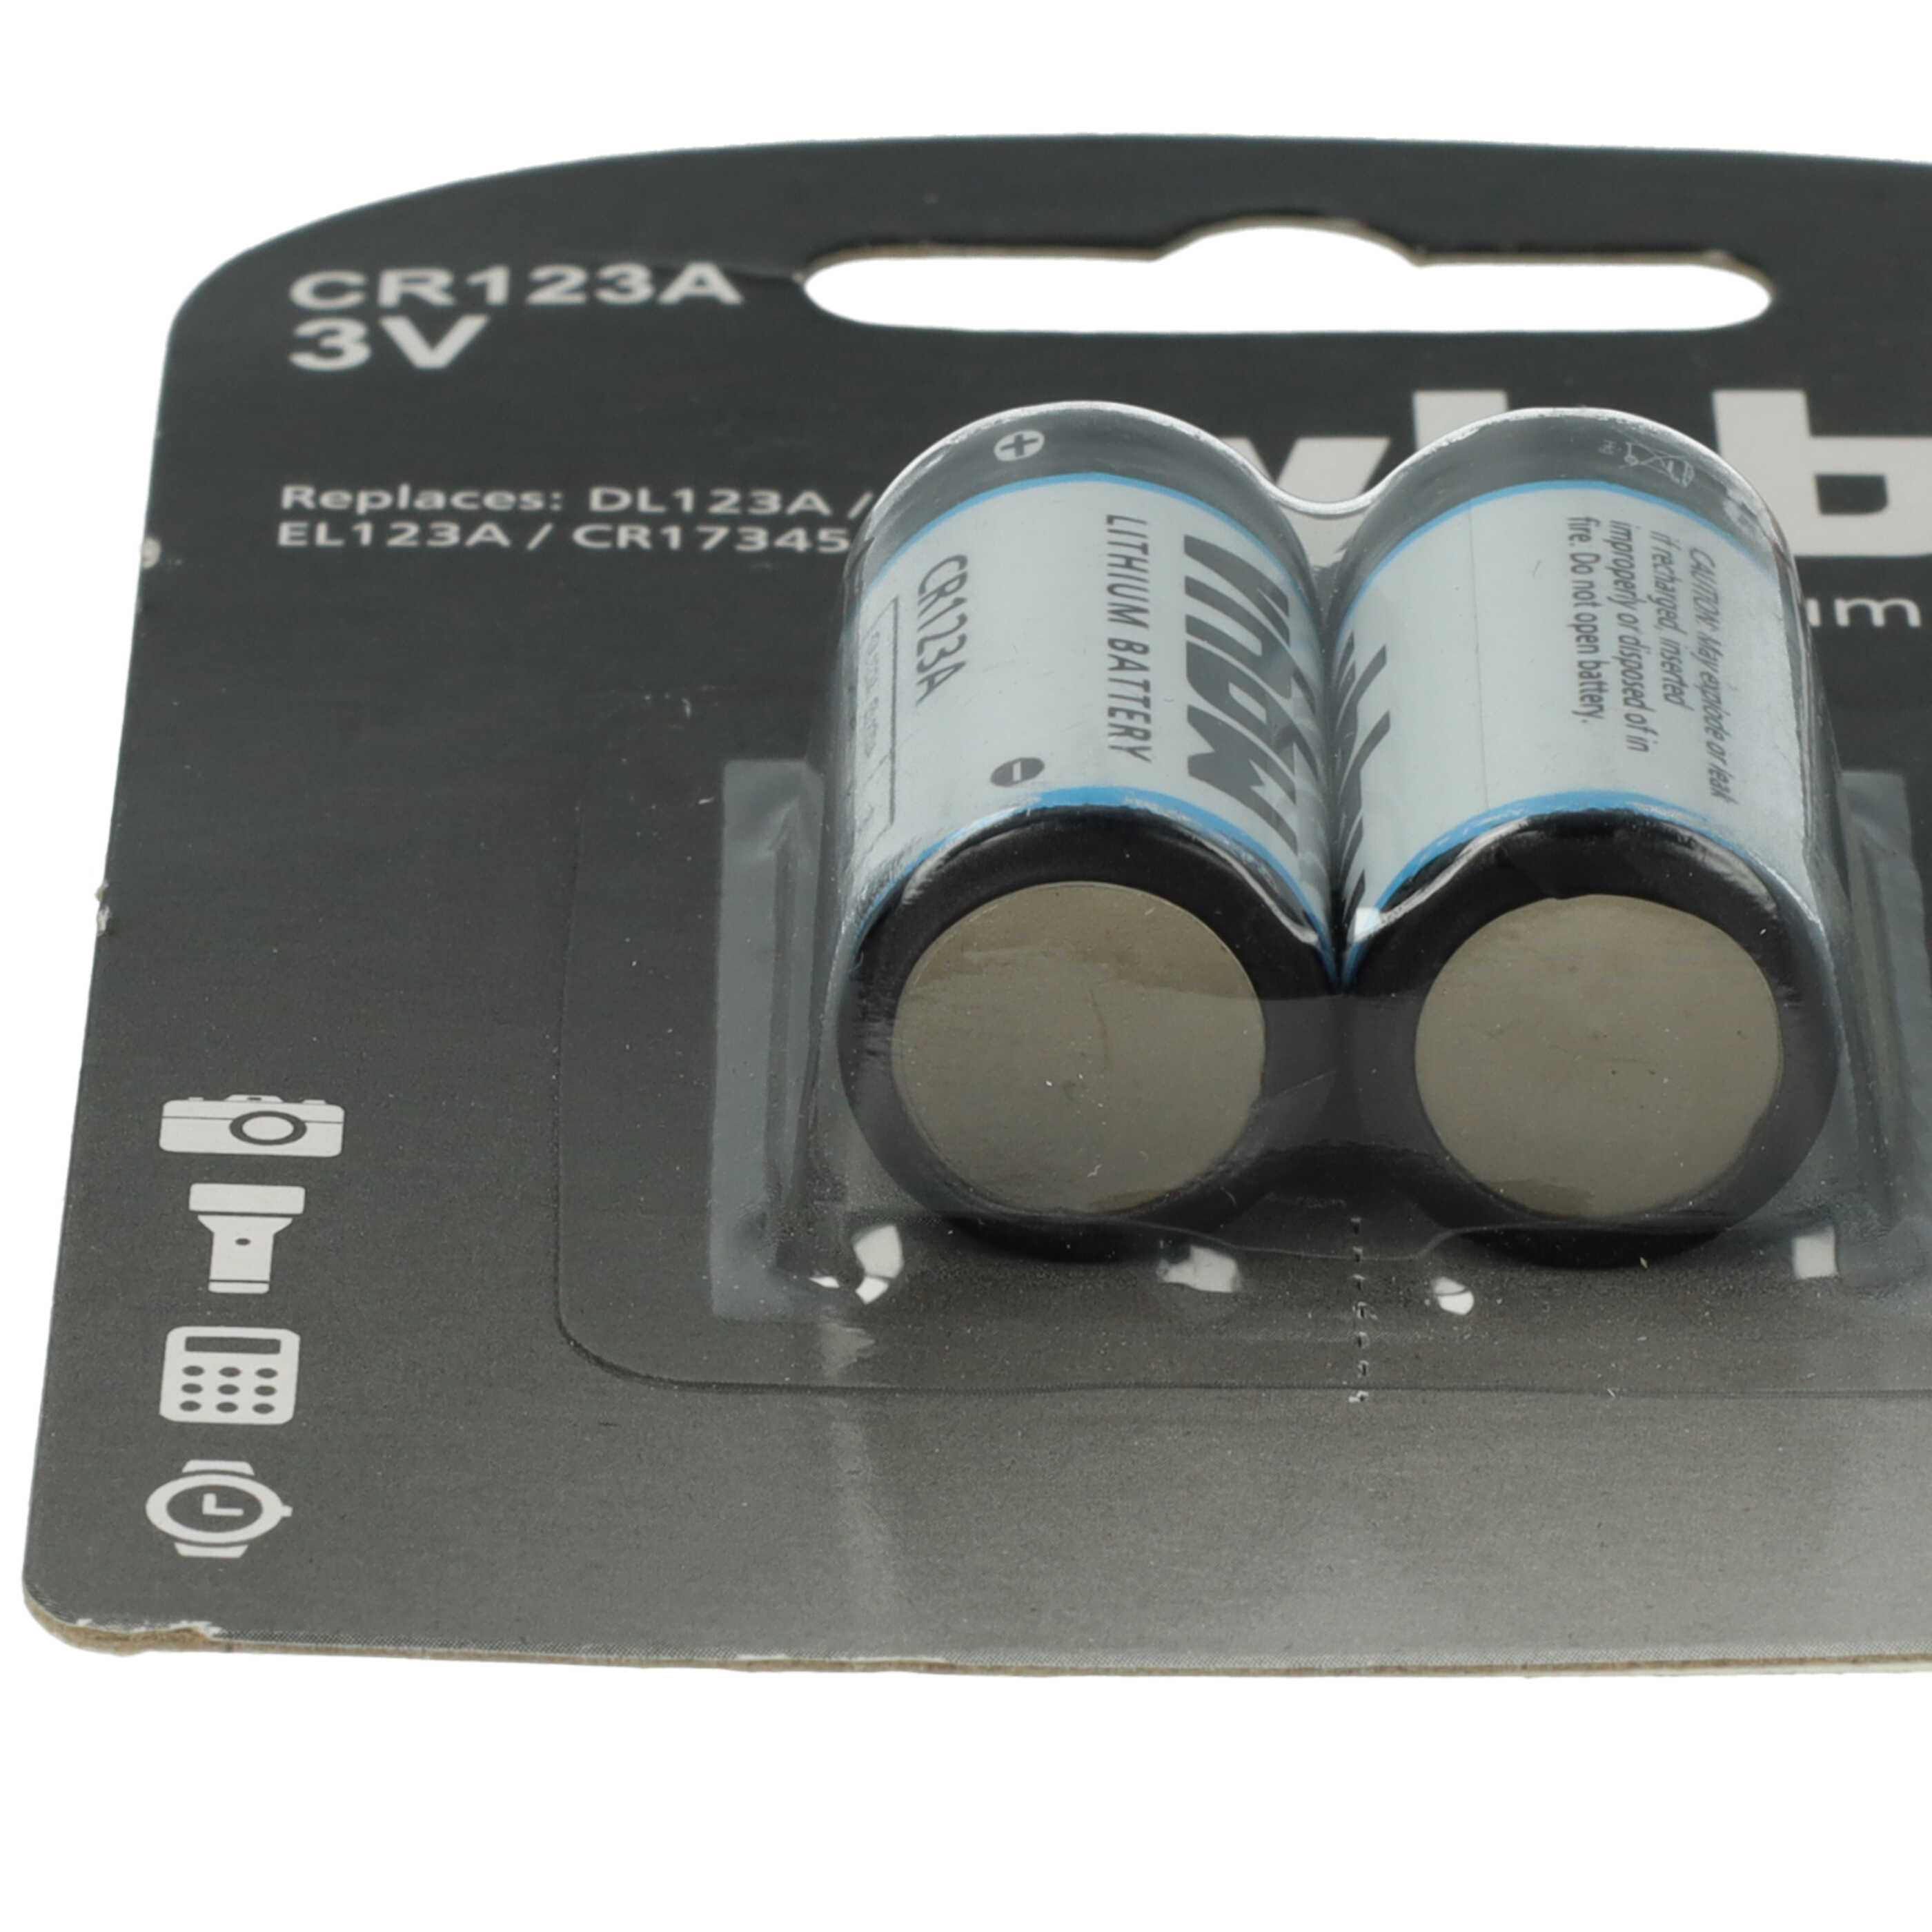 Batteria (2x pezzo) universale per vari dispositivi sostituisce 16340, CR17345, CR123A - 1600mAh 3V Li-Ion